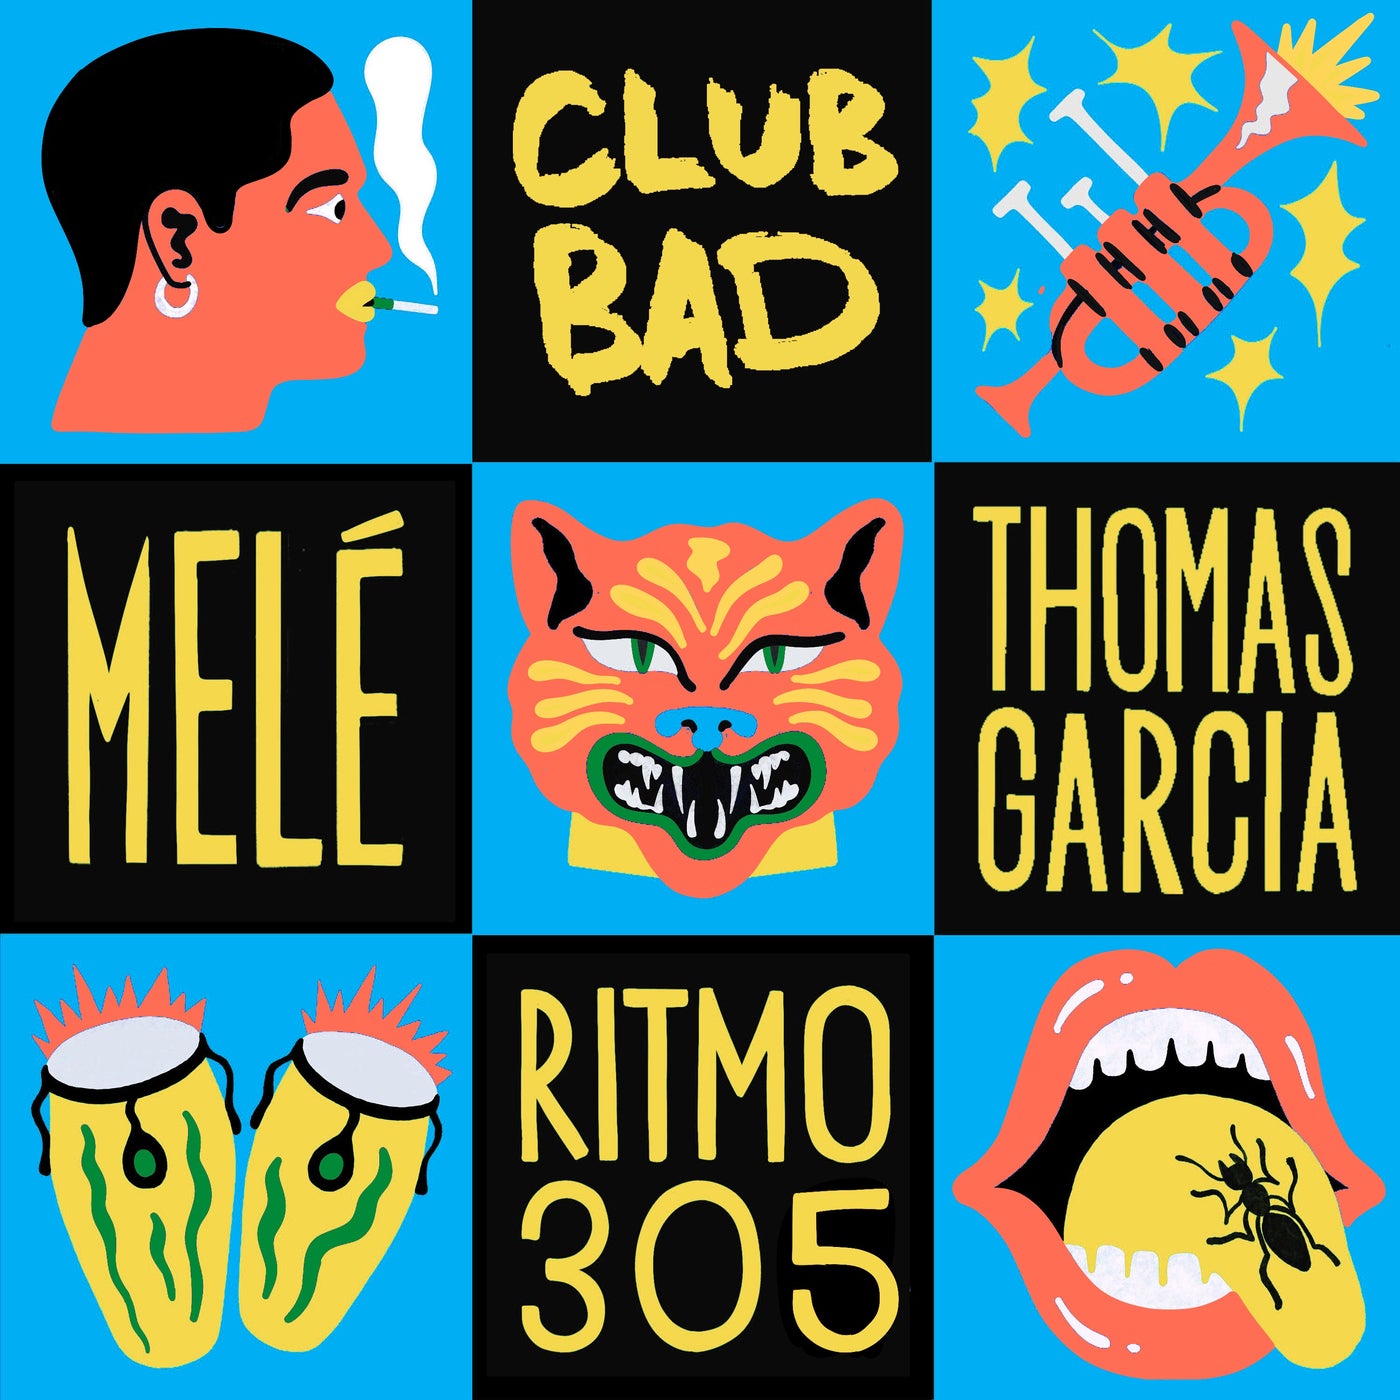 image cover: Thomas Garcia, Mele - Ritmo 305 on Club Bad